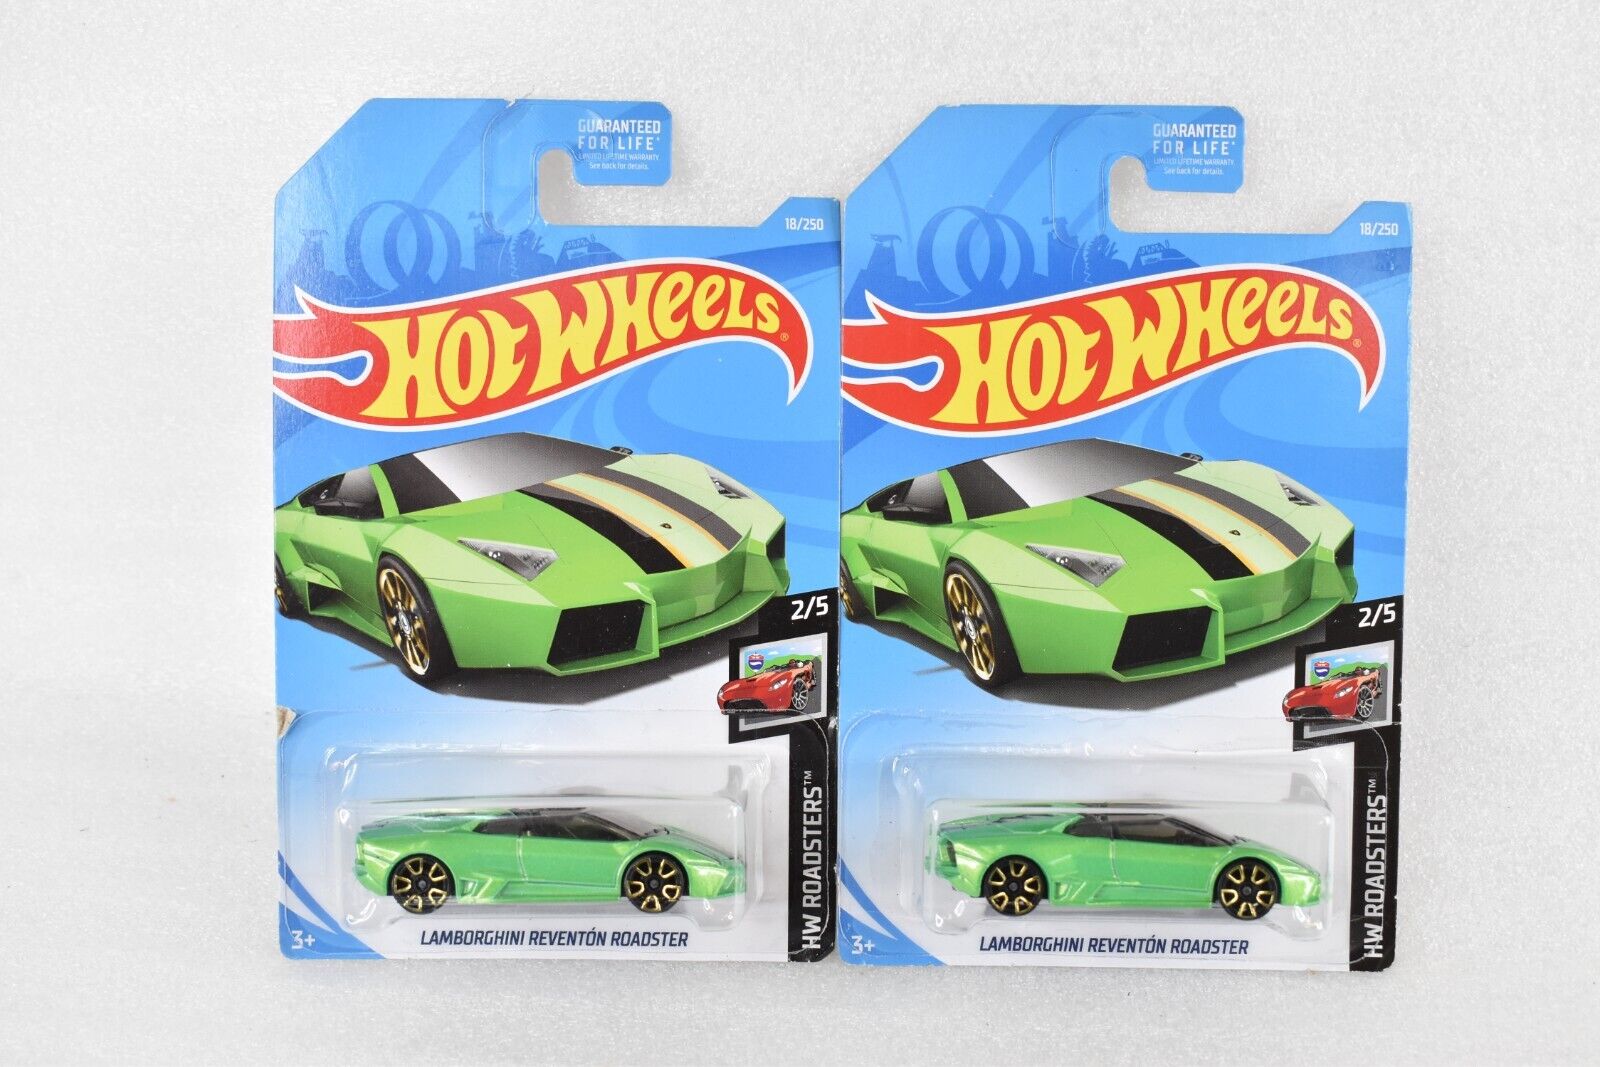 2x Hot Wheels Roadsters 2/5 Lamborghini Reventon Roadsters 18/250 Green PAIR 2